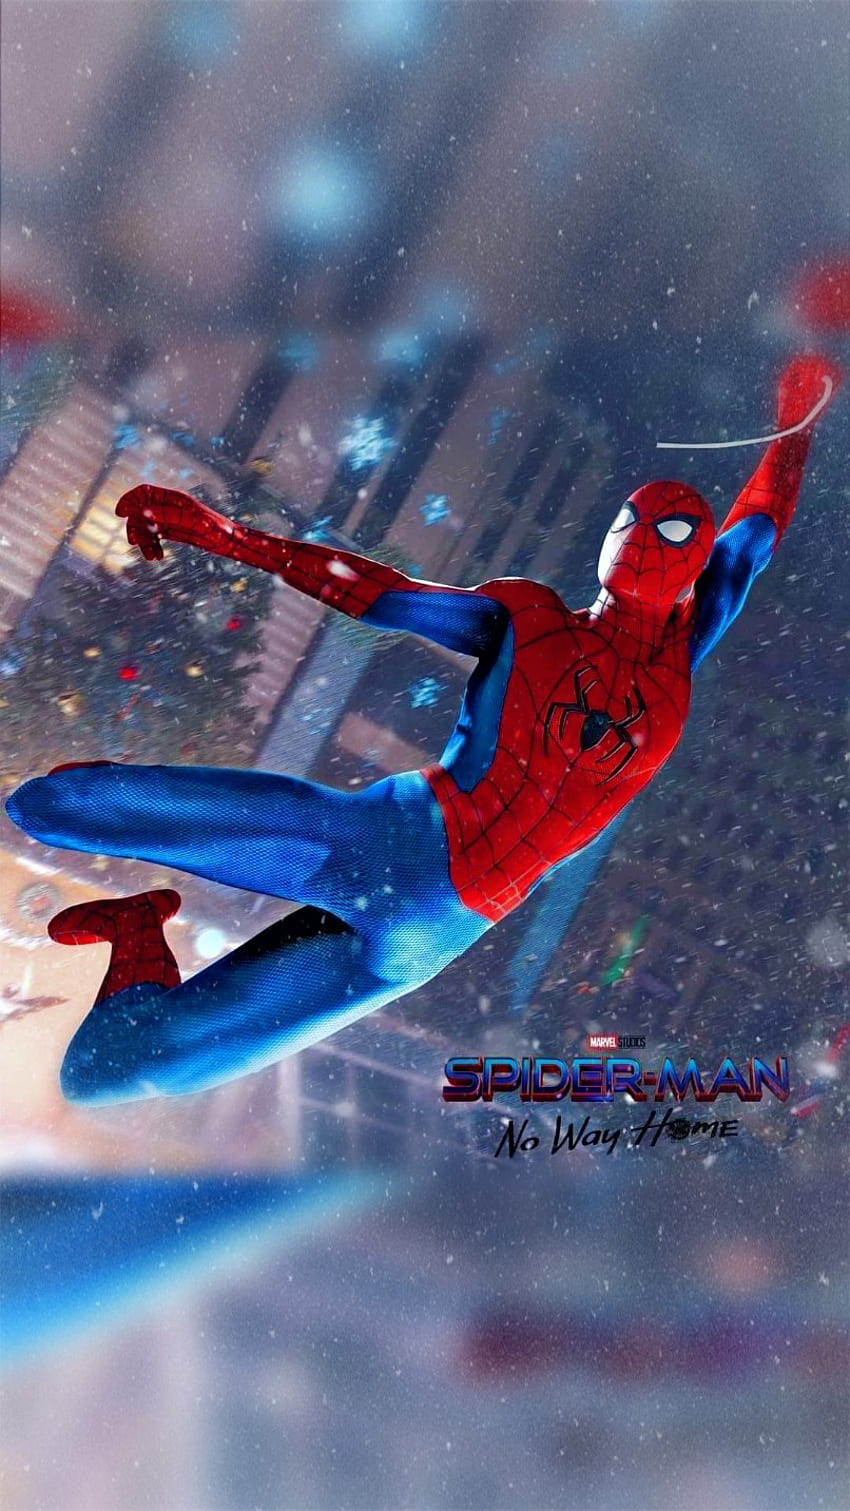 Spider-man Suit, No way home, Tom Holland, Spiderverse, Spiderman ...